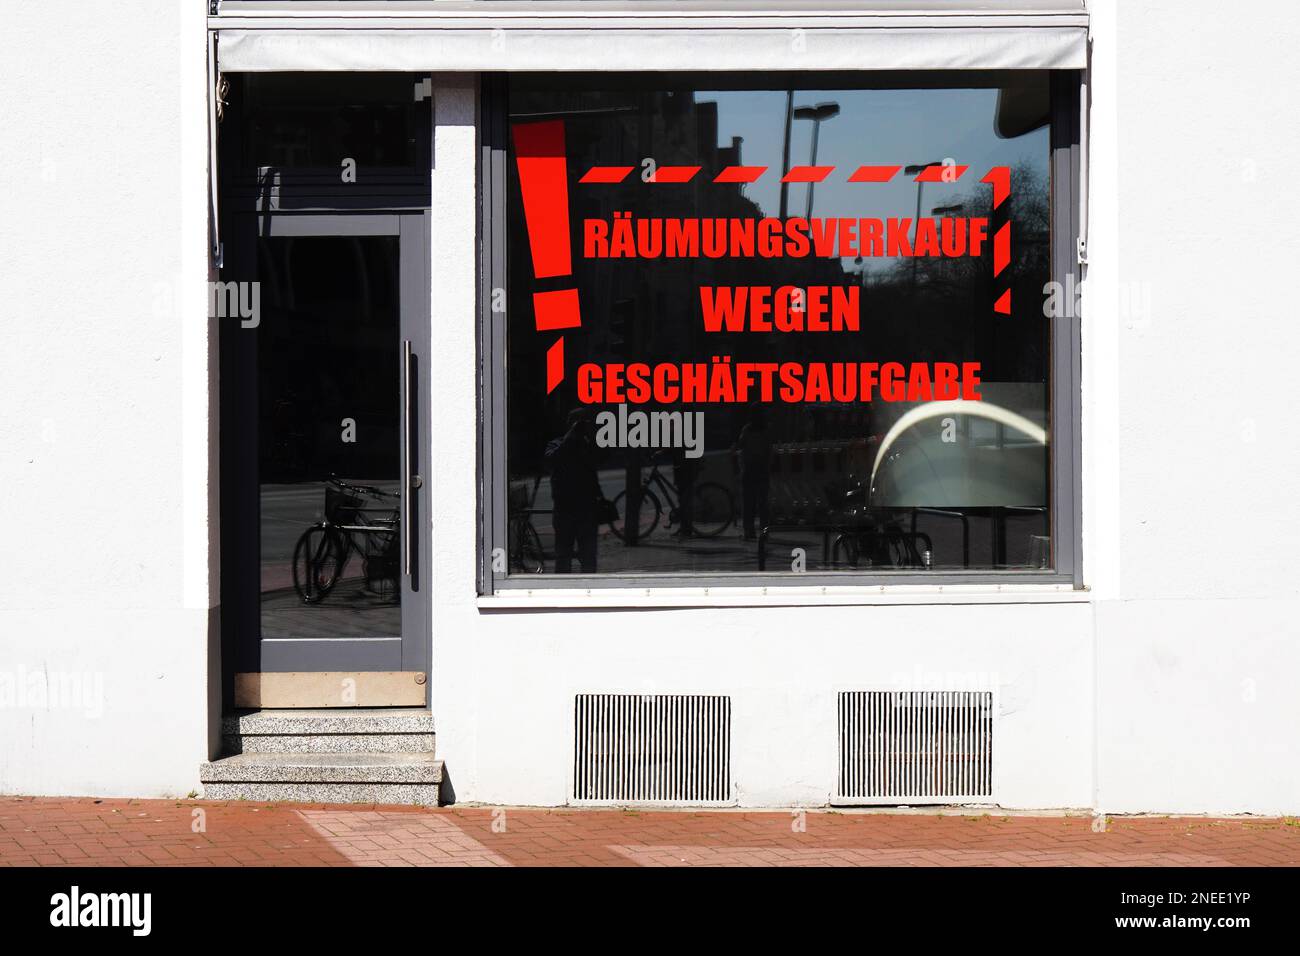 Raeumungsverkauf wegen Geschaeftsaufgabe translates from German as clearance sale due to store closure - closing down shop during economy crisis in Stock Photo